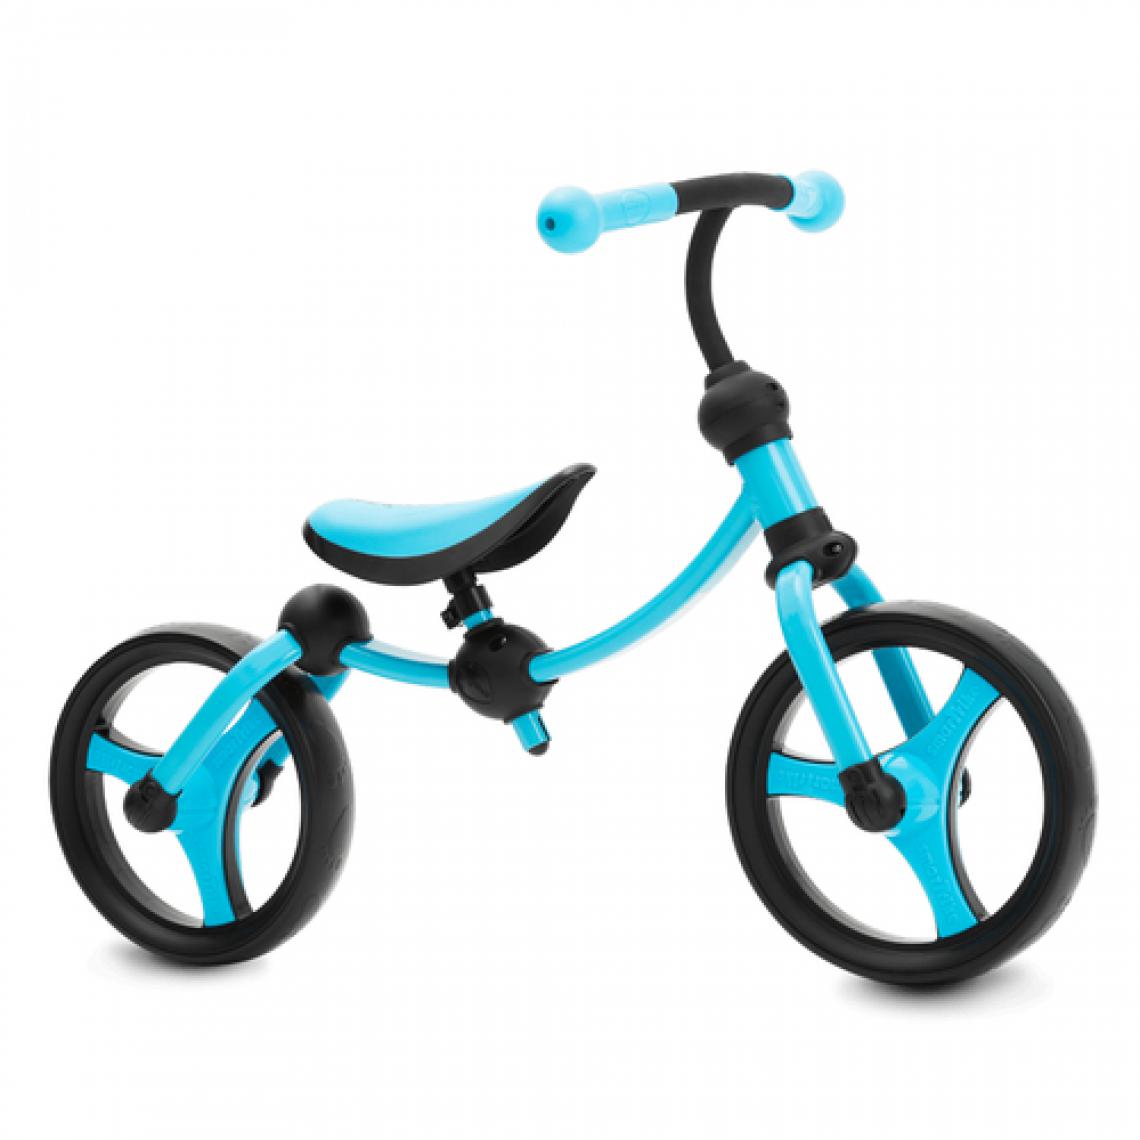 Smart Trike - Draisienne smarTrike 2-in-1 Running Bike Turquoise et Noire - Tricycle